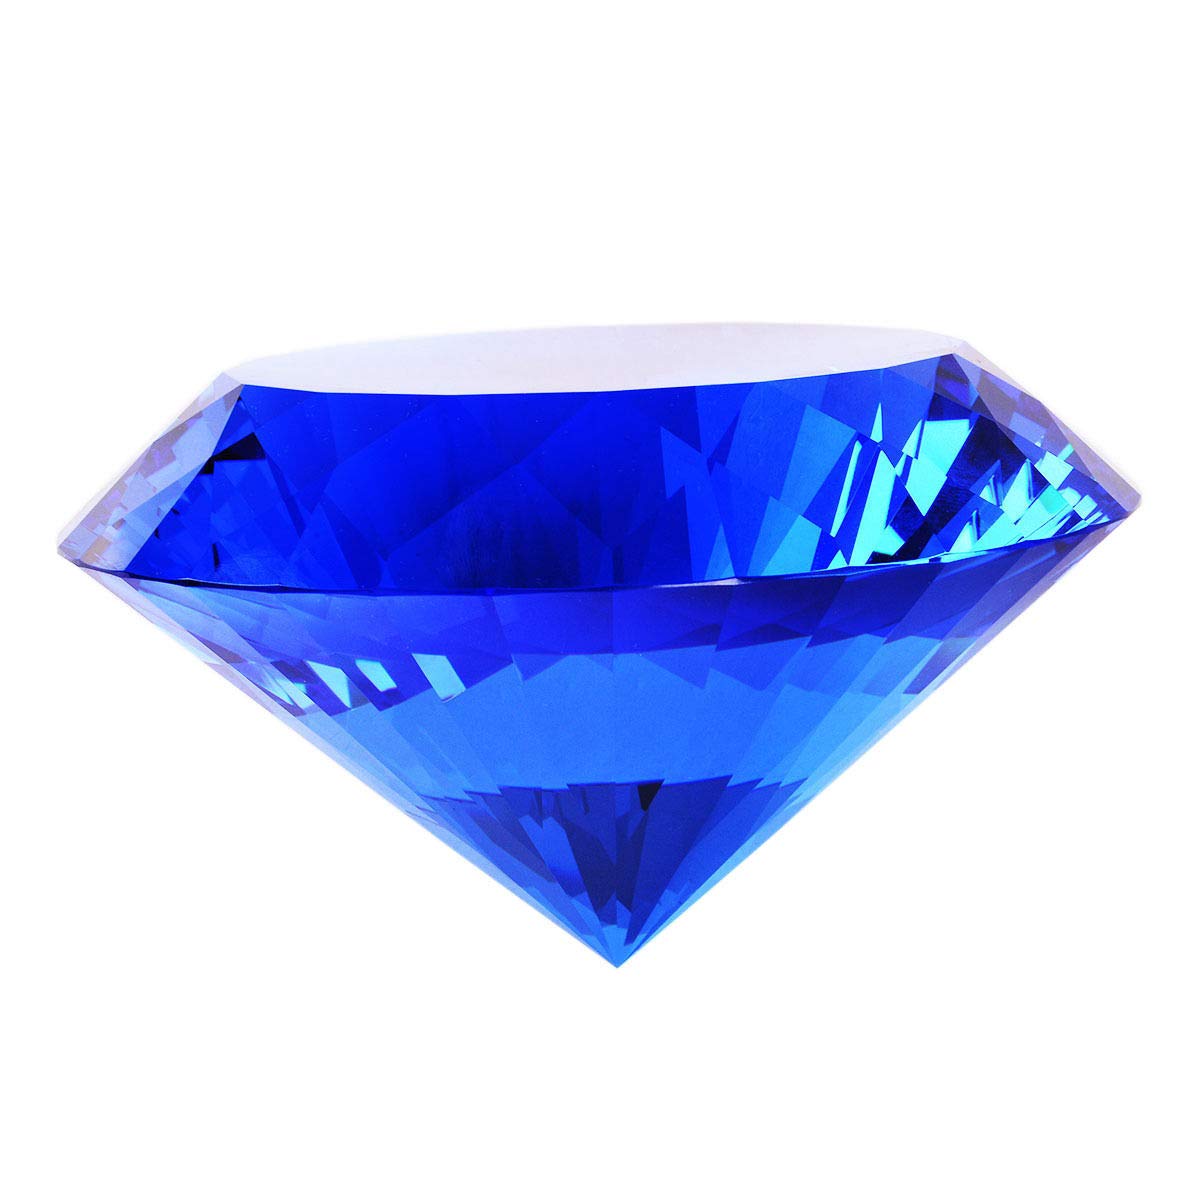 Digismart Red, white, Blue, Orange Crystal Glass Ball & Diamond Shaped Decoration Jewel Paperweight